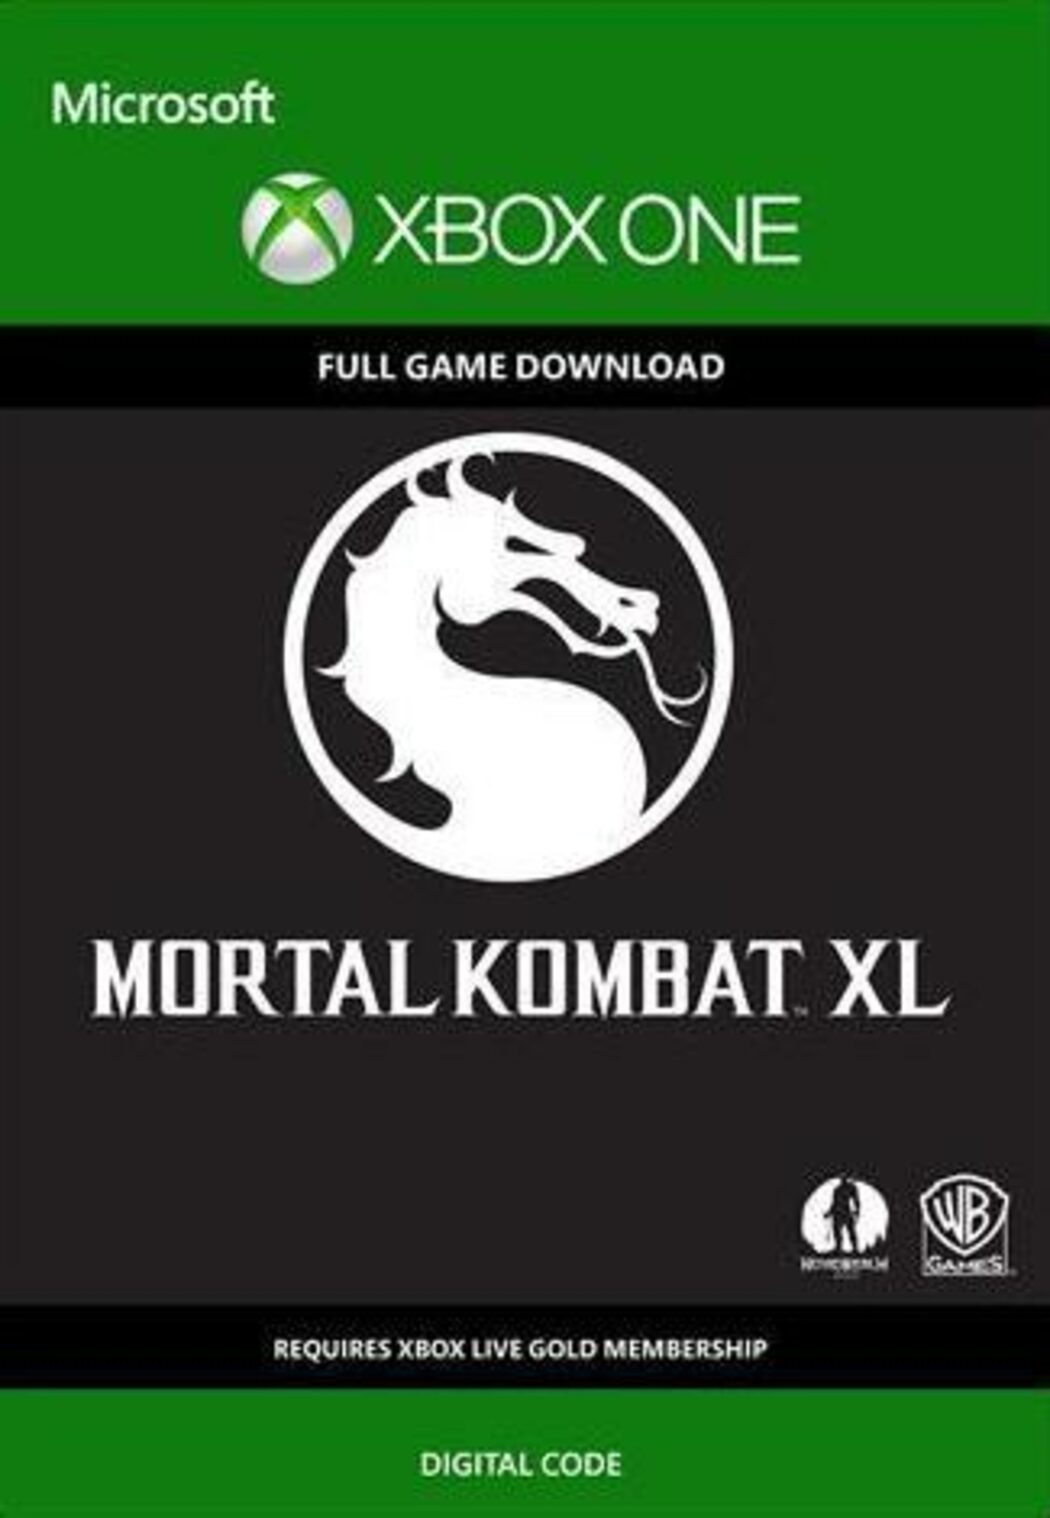 Comprar Mortal Kombat XL para XBOX ONE - mídia física - Xande A Lenda  Games. A sua loja de jogos!